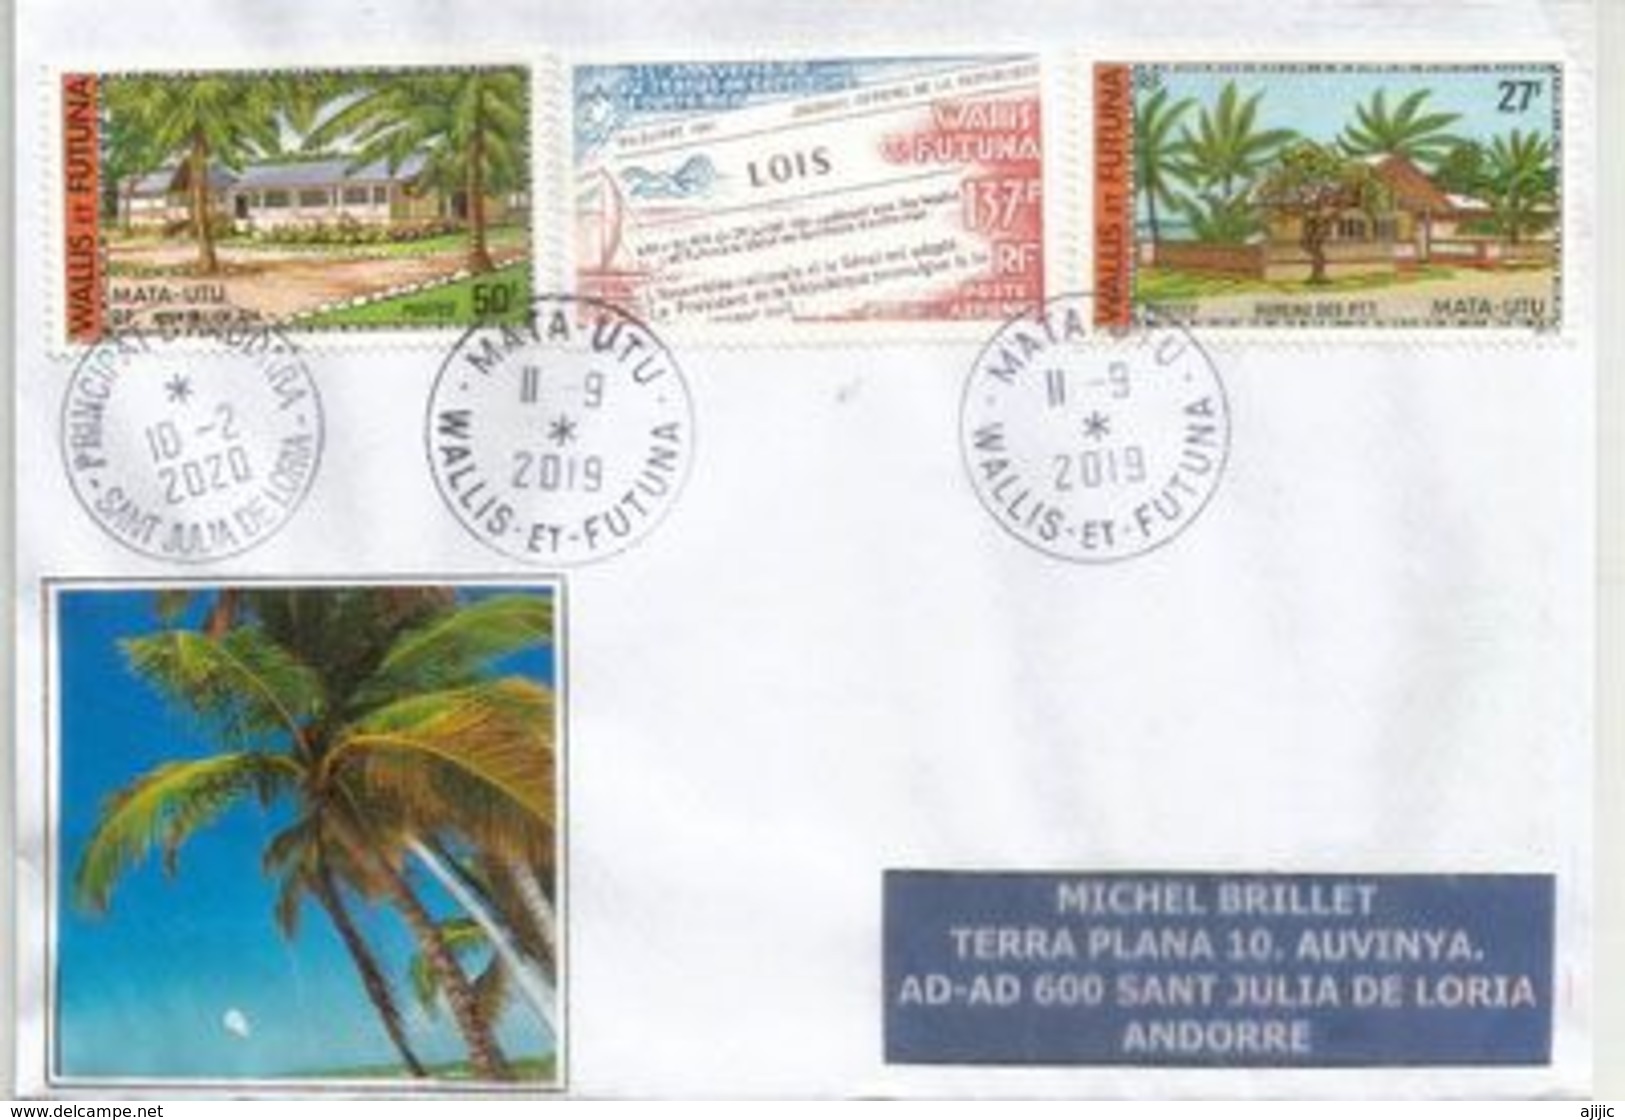 2019. Belle Lettre De Mata Utu (Wallis & Futuna) ., Adressée Andorra, Avec Timbre à Date Arrivée - Lettres & Documents